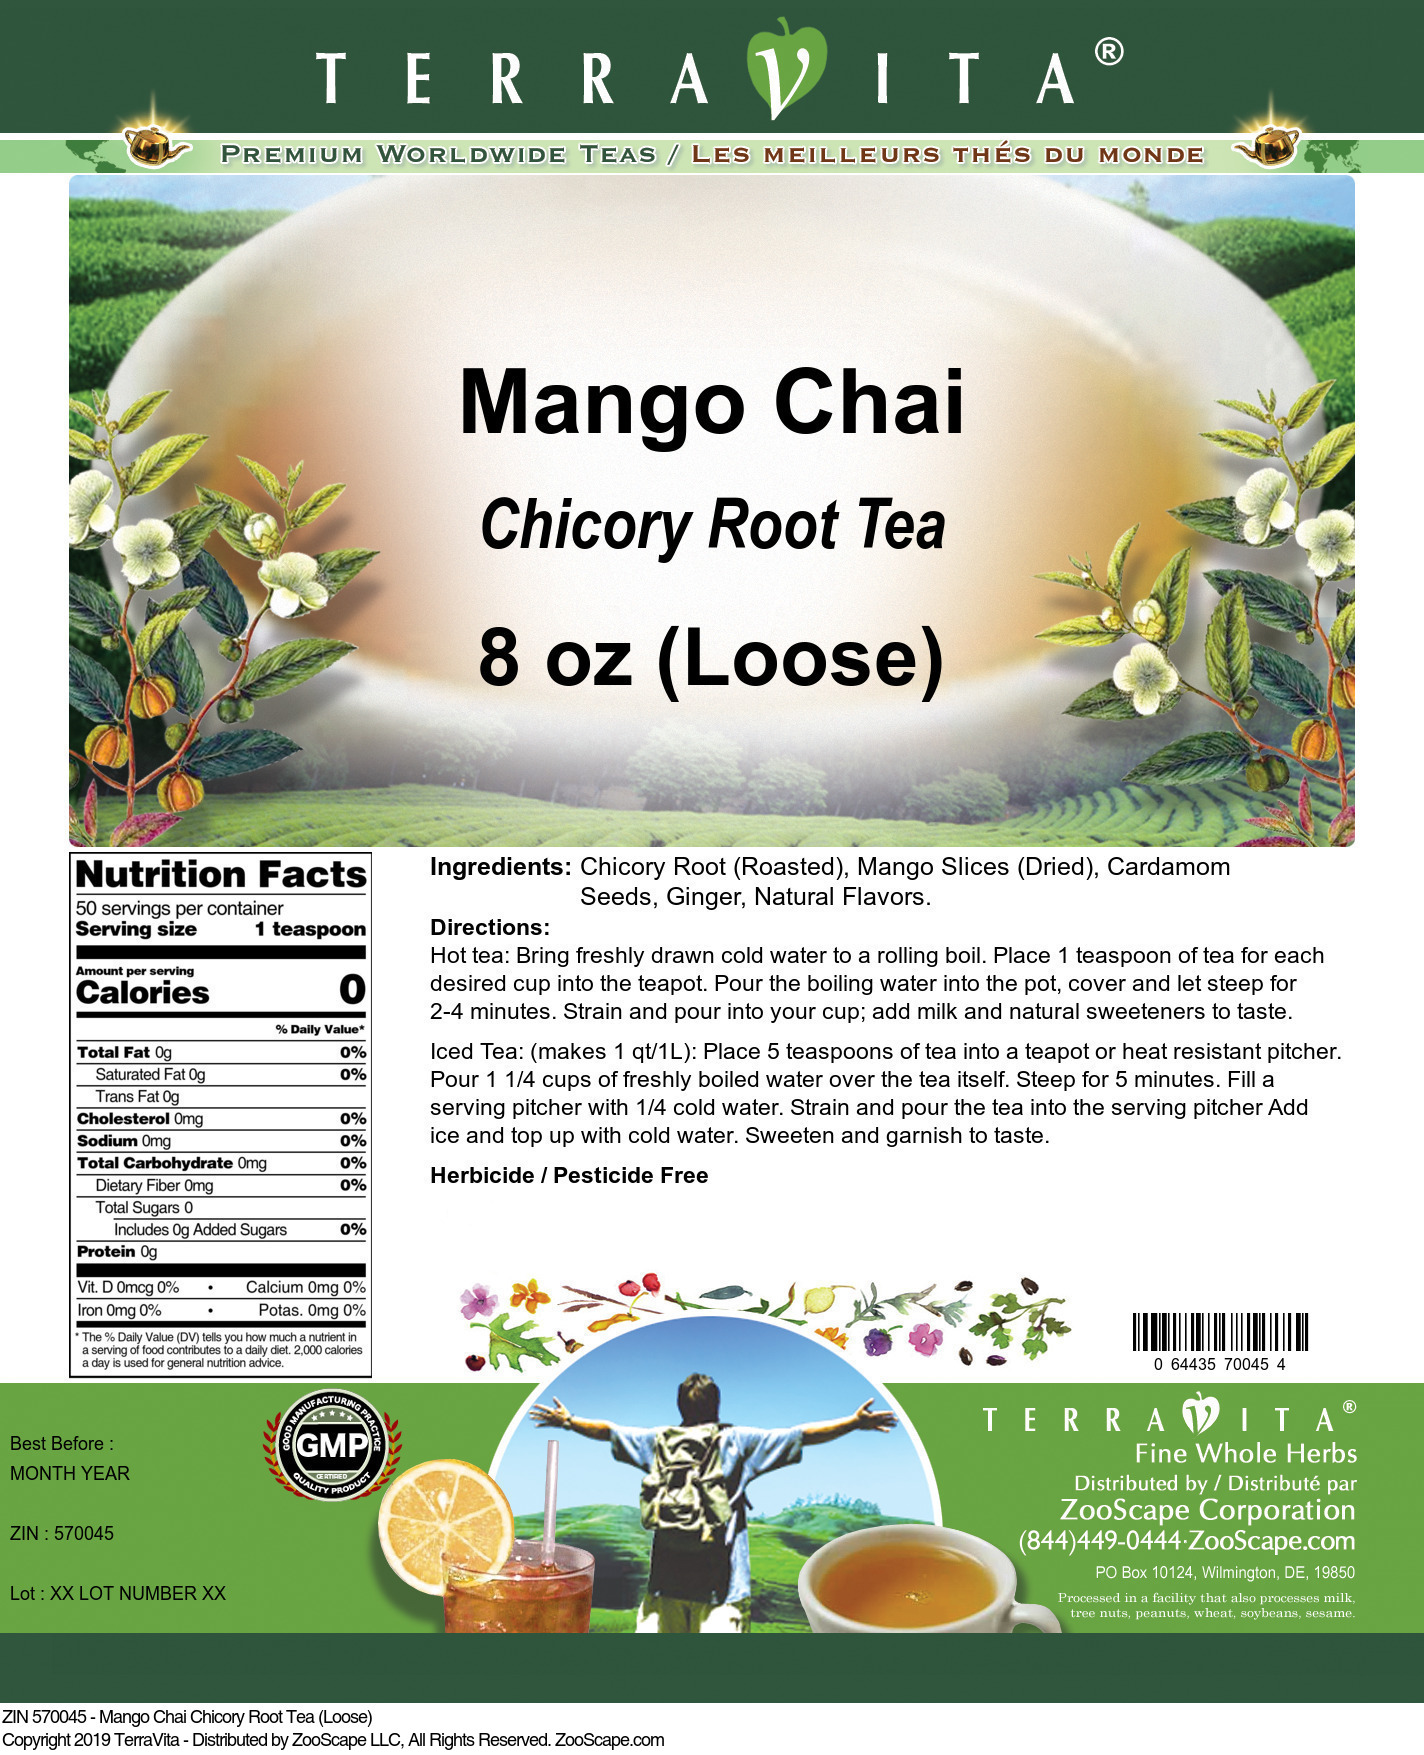 Mango Chai Chicory Root Tea (Loose) - Label